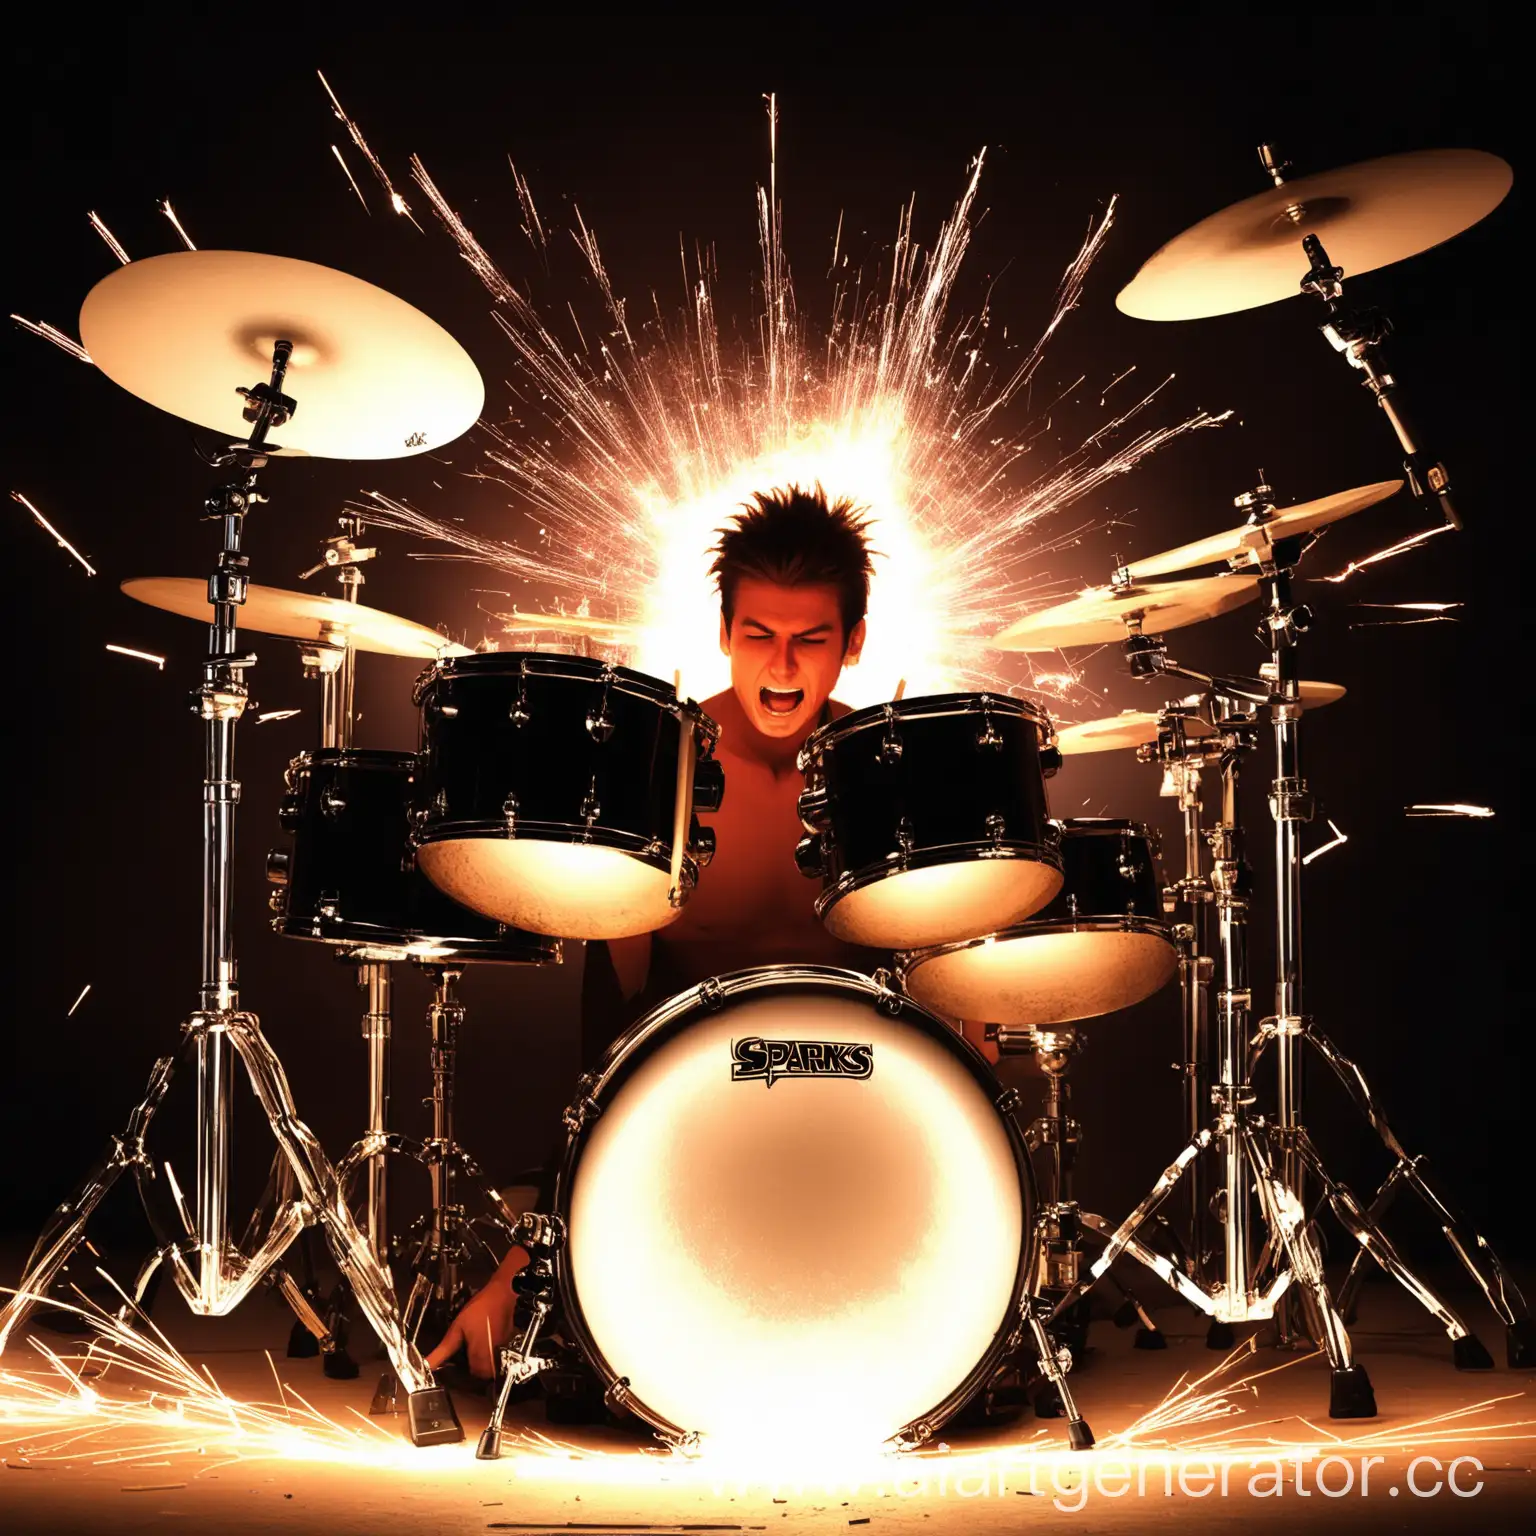 Dynamic-Drummer-Strikes-Sparks-in-Vibrant-Concert-Performance